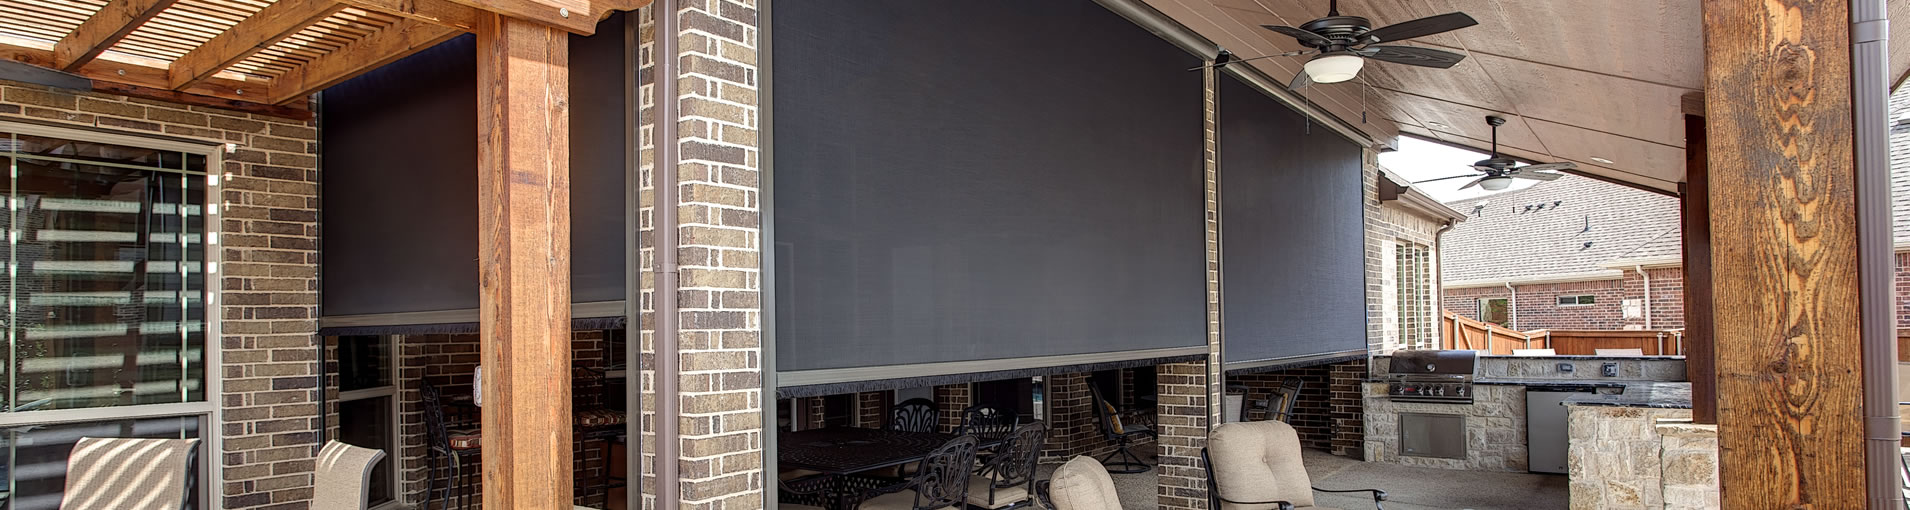 retractable outdoor patios Motorized Miami for and screens porches, decks